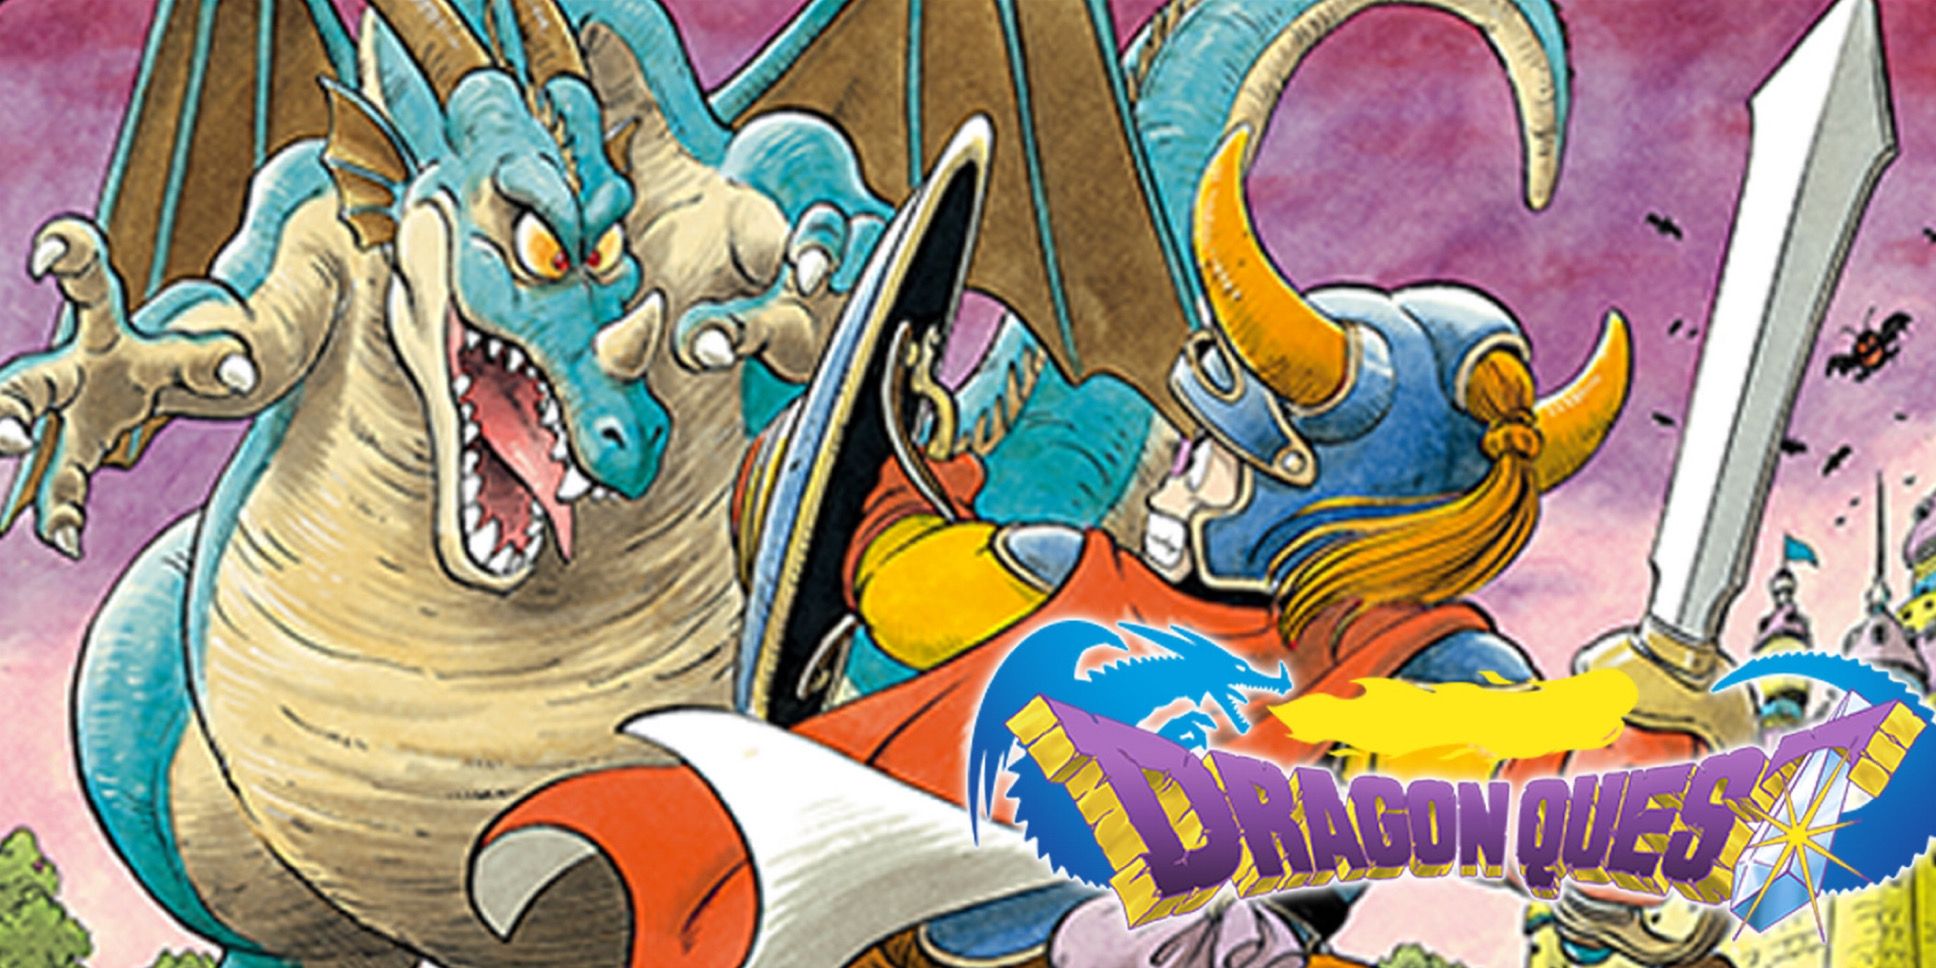 Original Cover Art From Dragon Quest